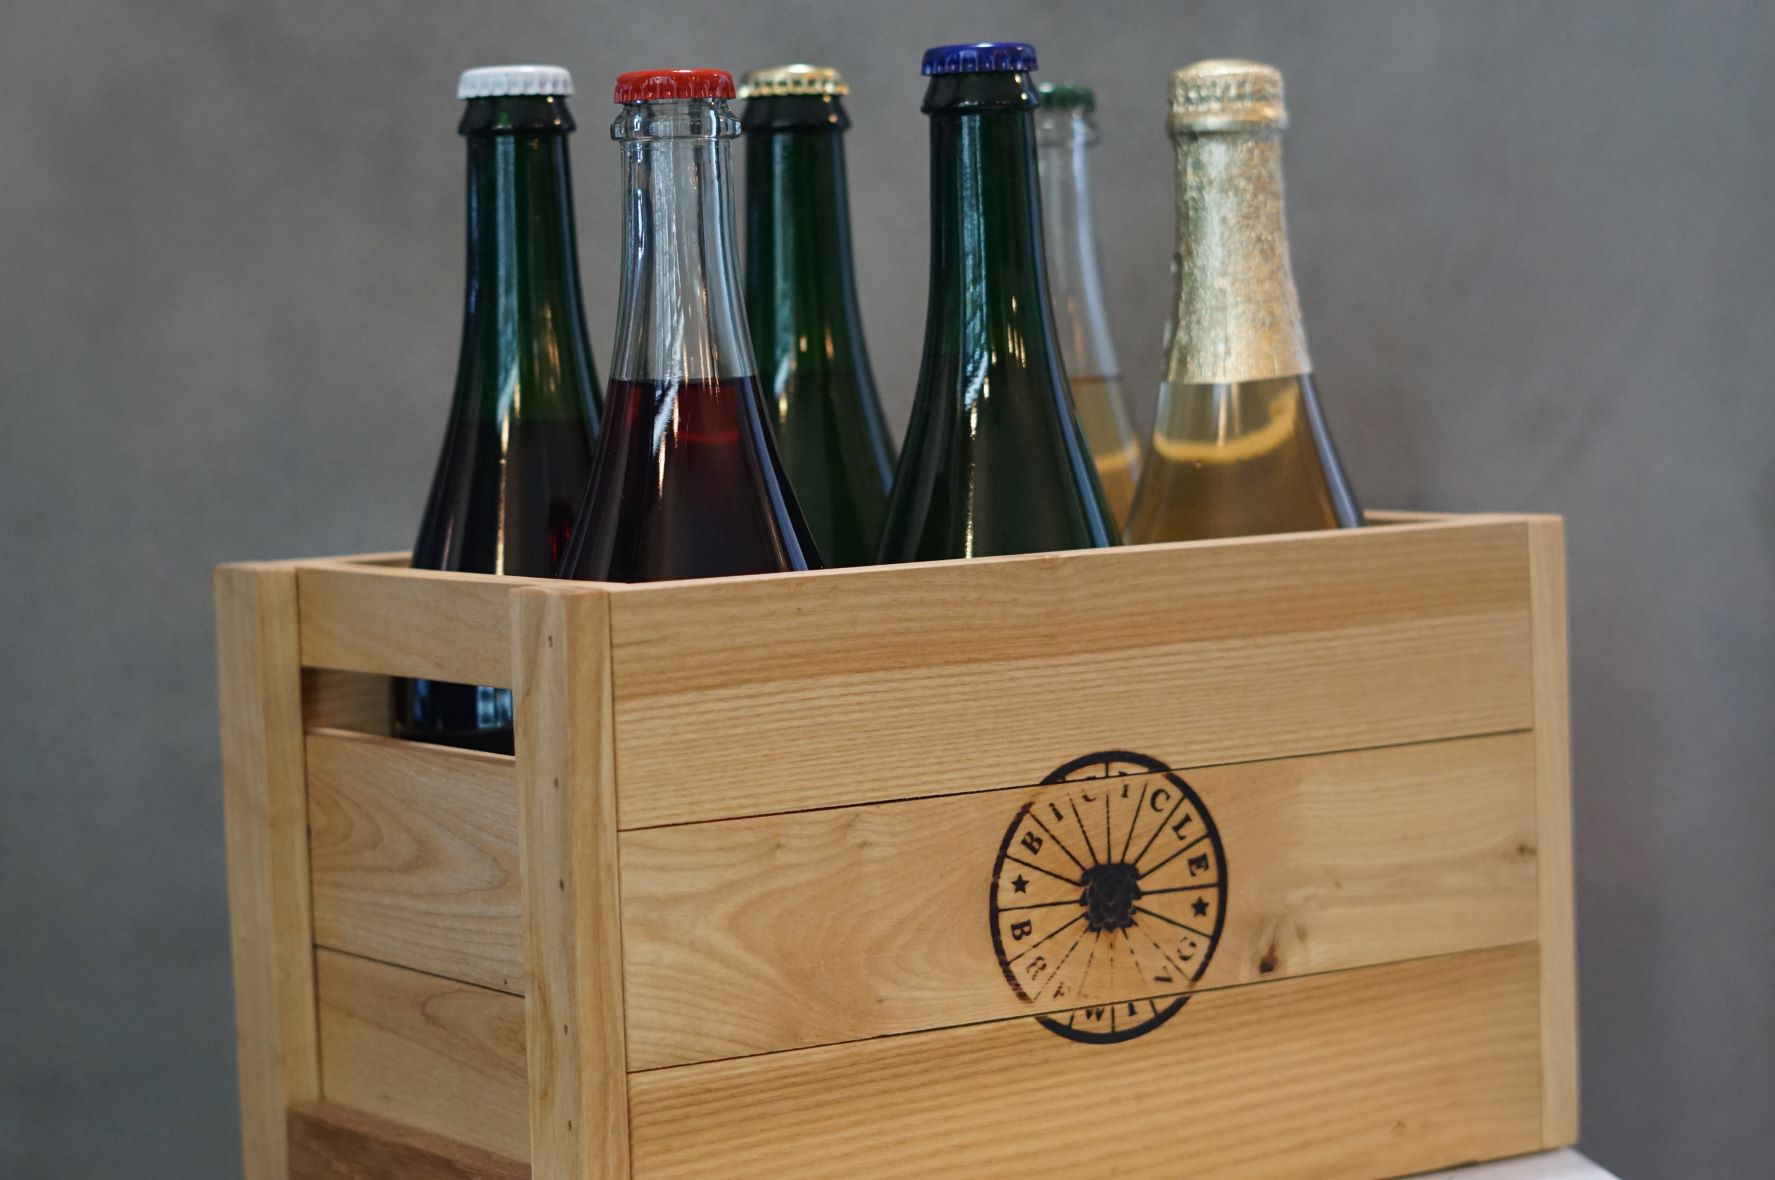 Beer crate - handmade from reclaimed wood